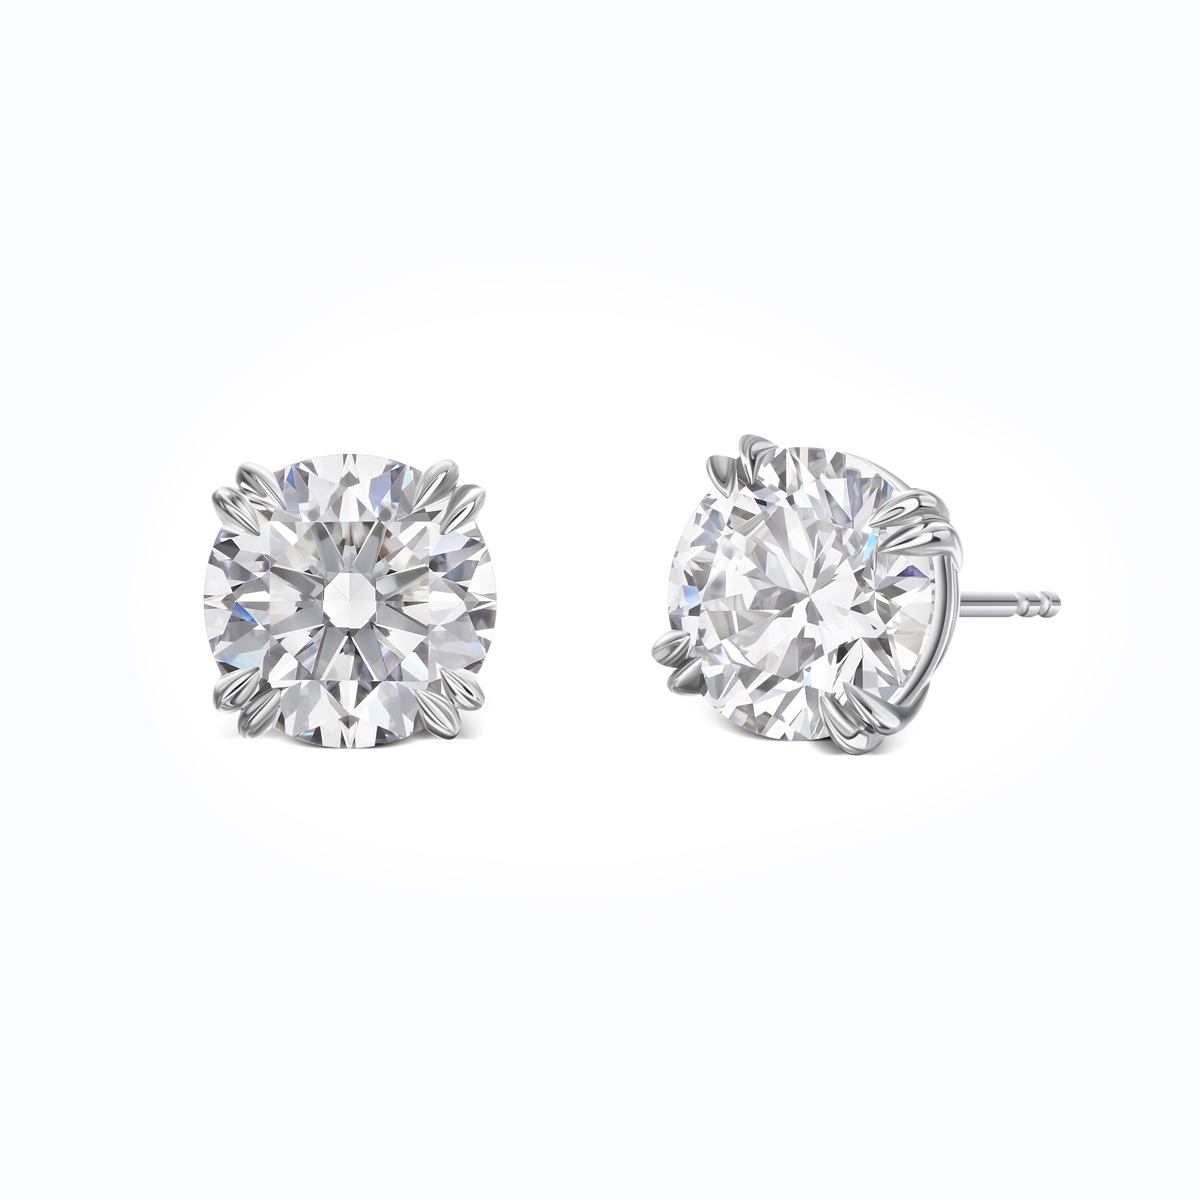 Vintage diamond set stud earrings, French, ci | Ref 26191